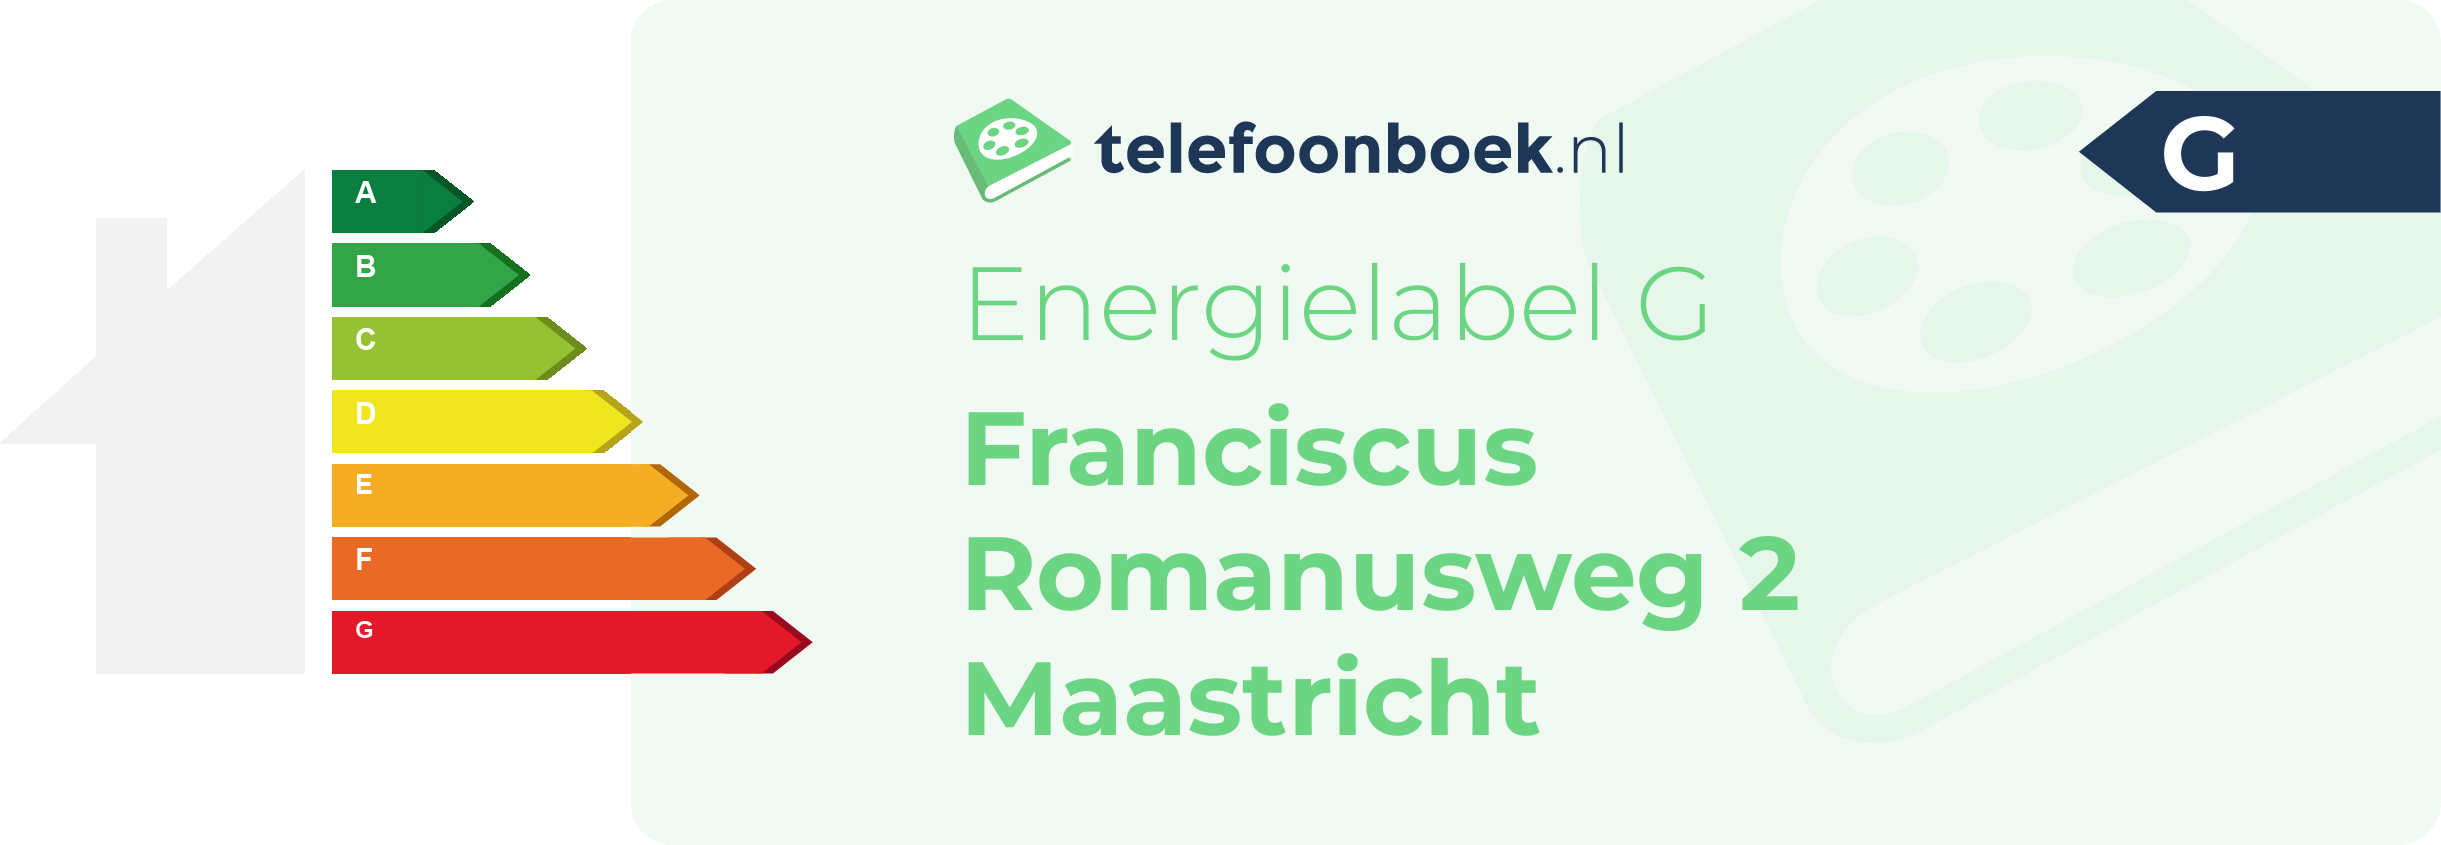 Energielabel Franciscus Romanusweg 2 Maastricht